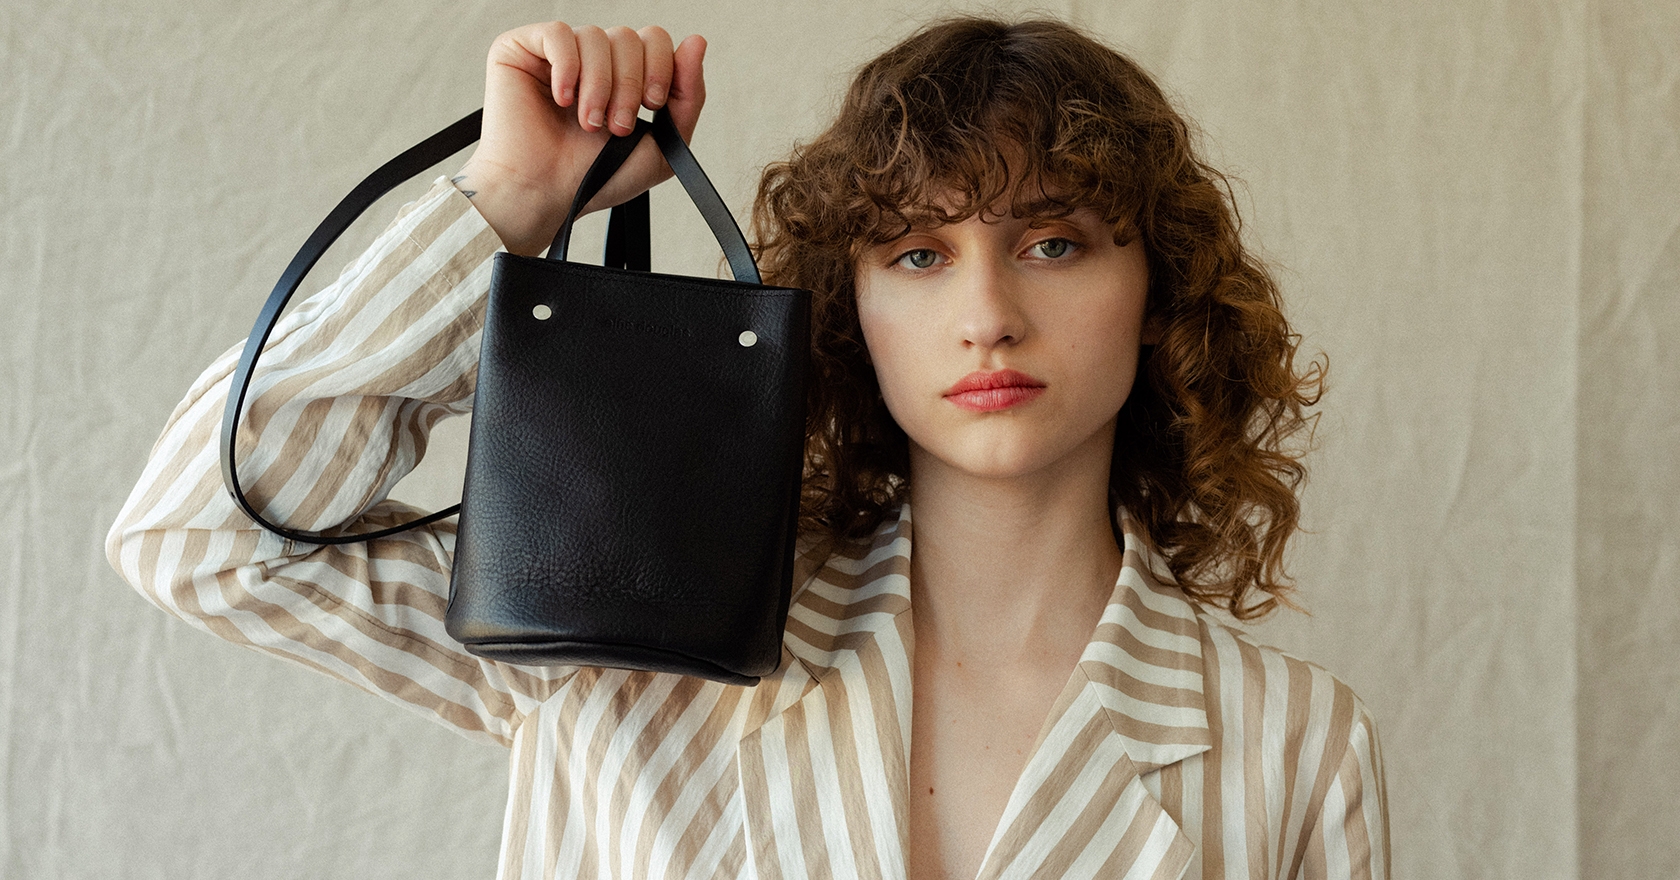 American Handbags: 11 Brands to Know & Love | LoveToKnow